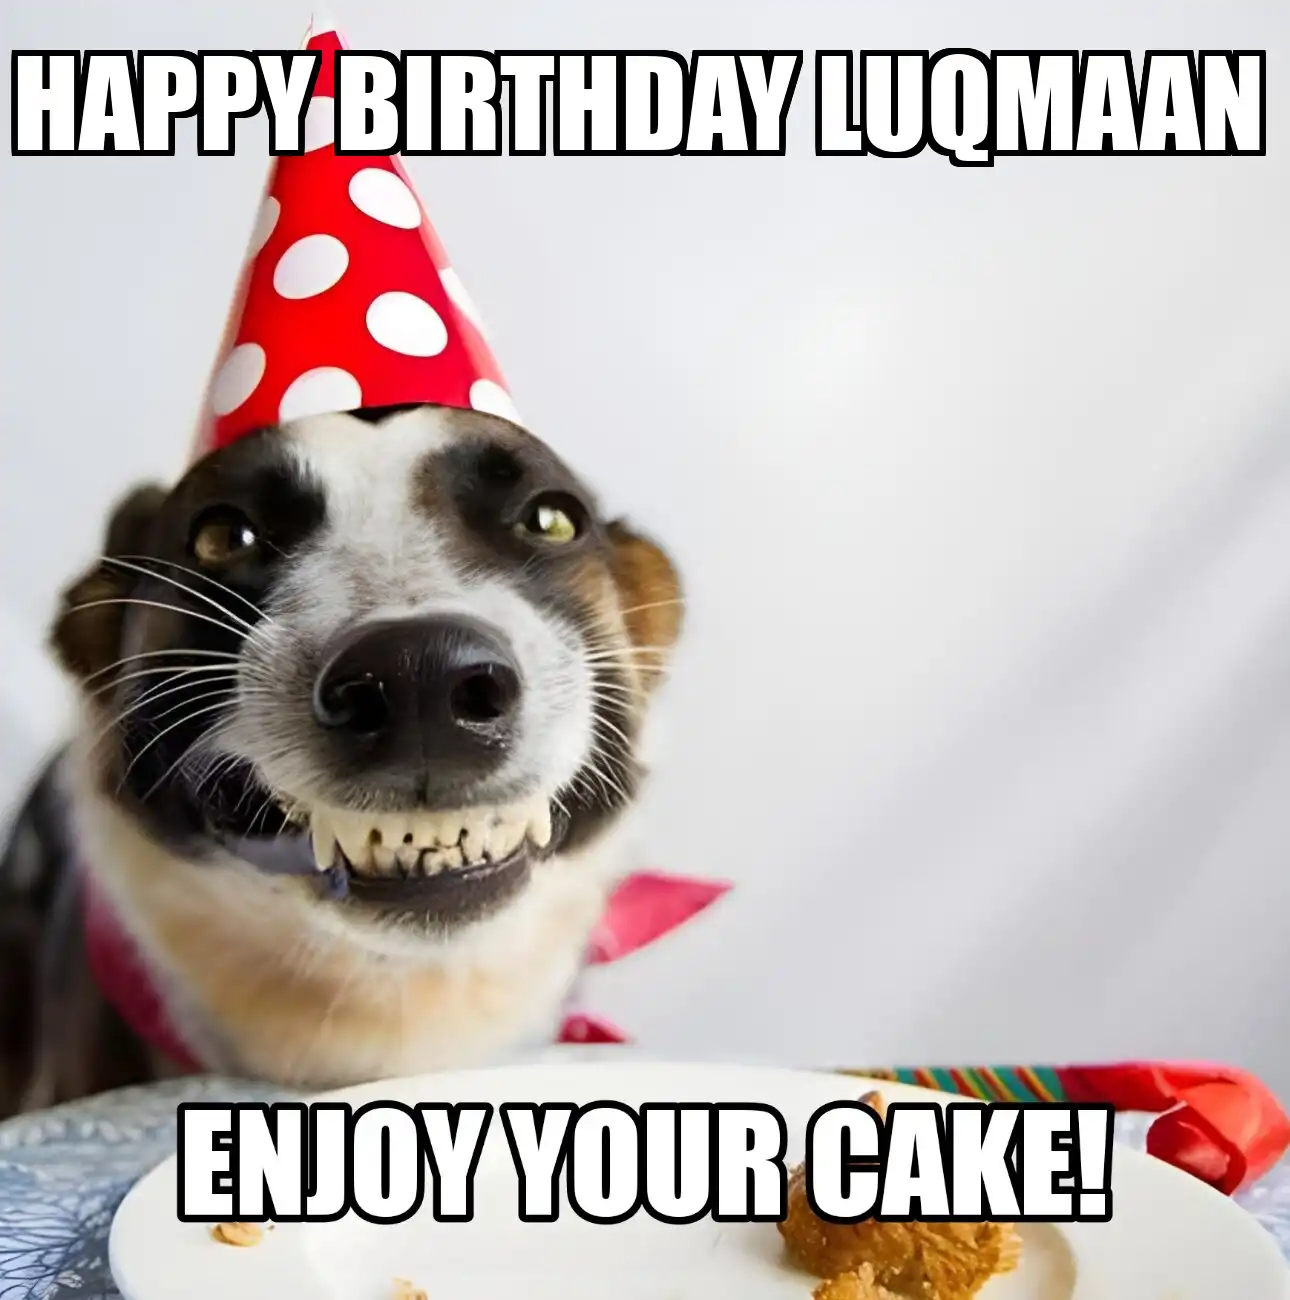 Happy Birthday Luqmaan Enjoy Your Cake Dog Meme